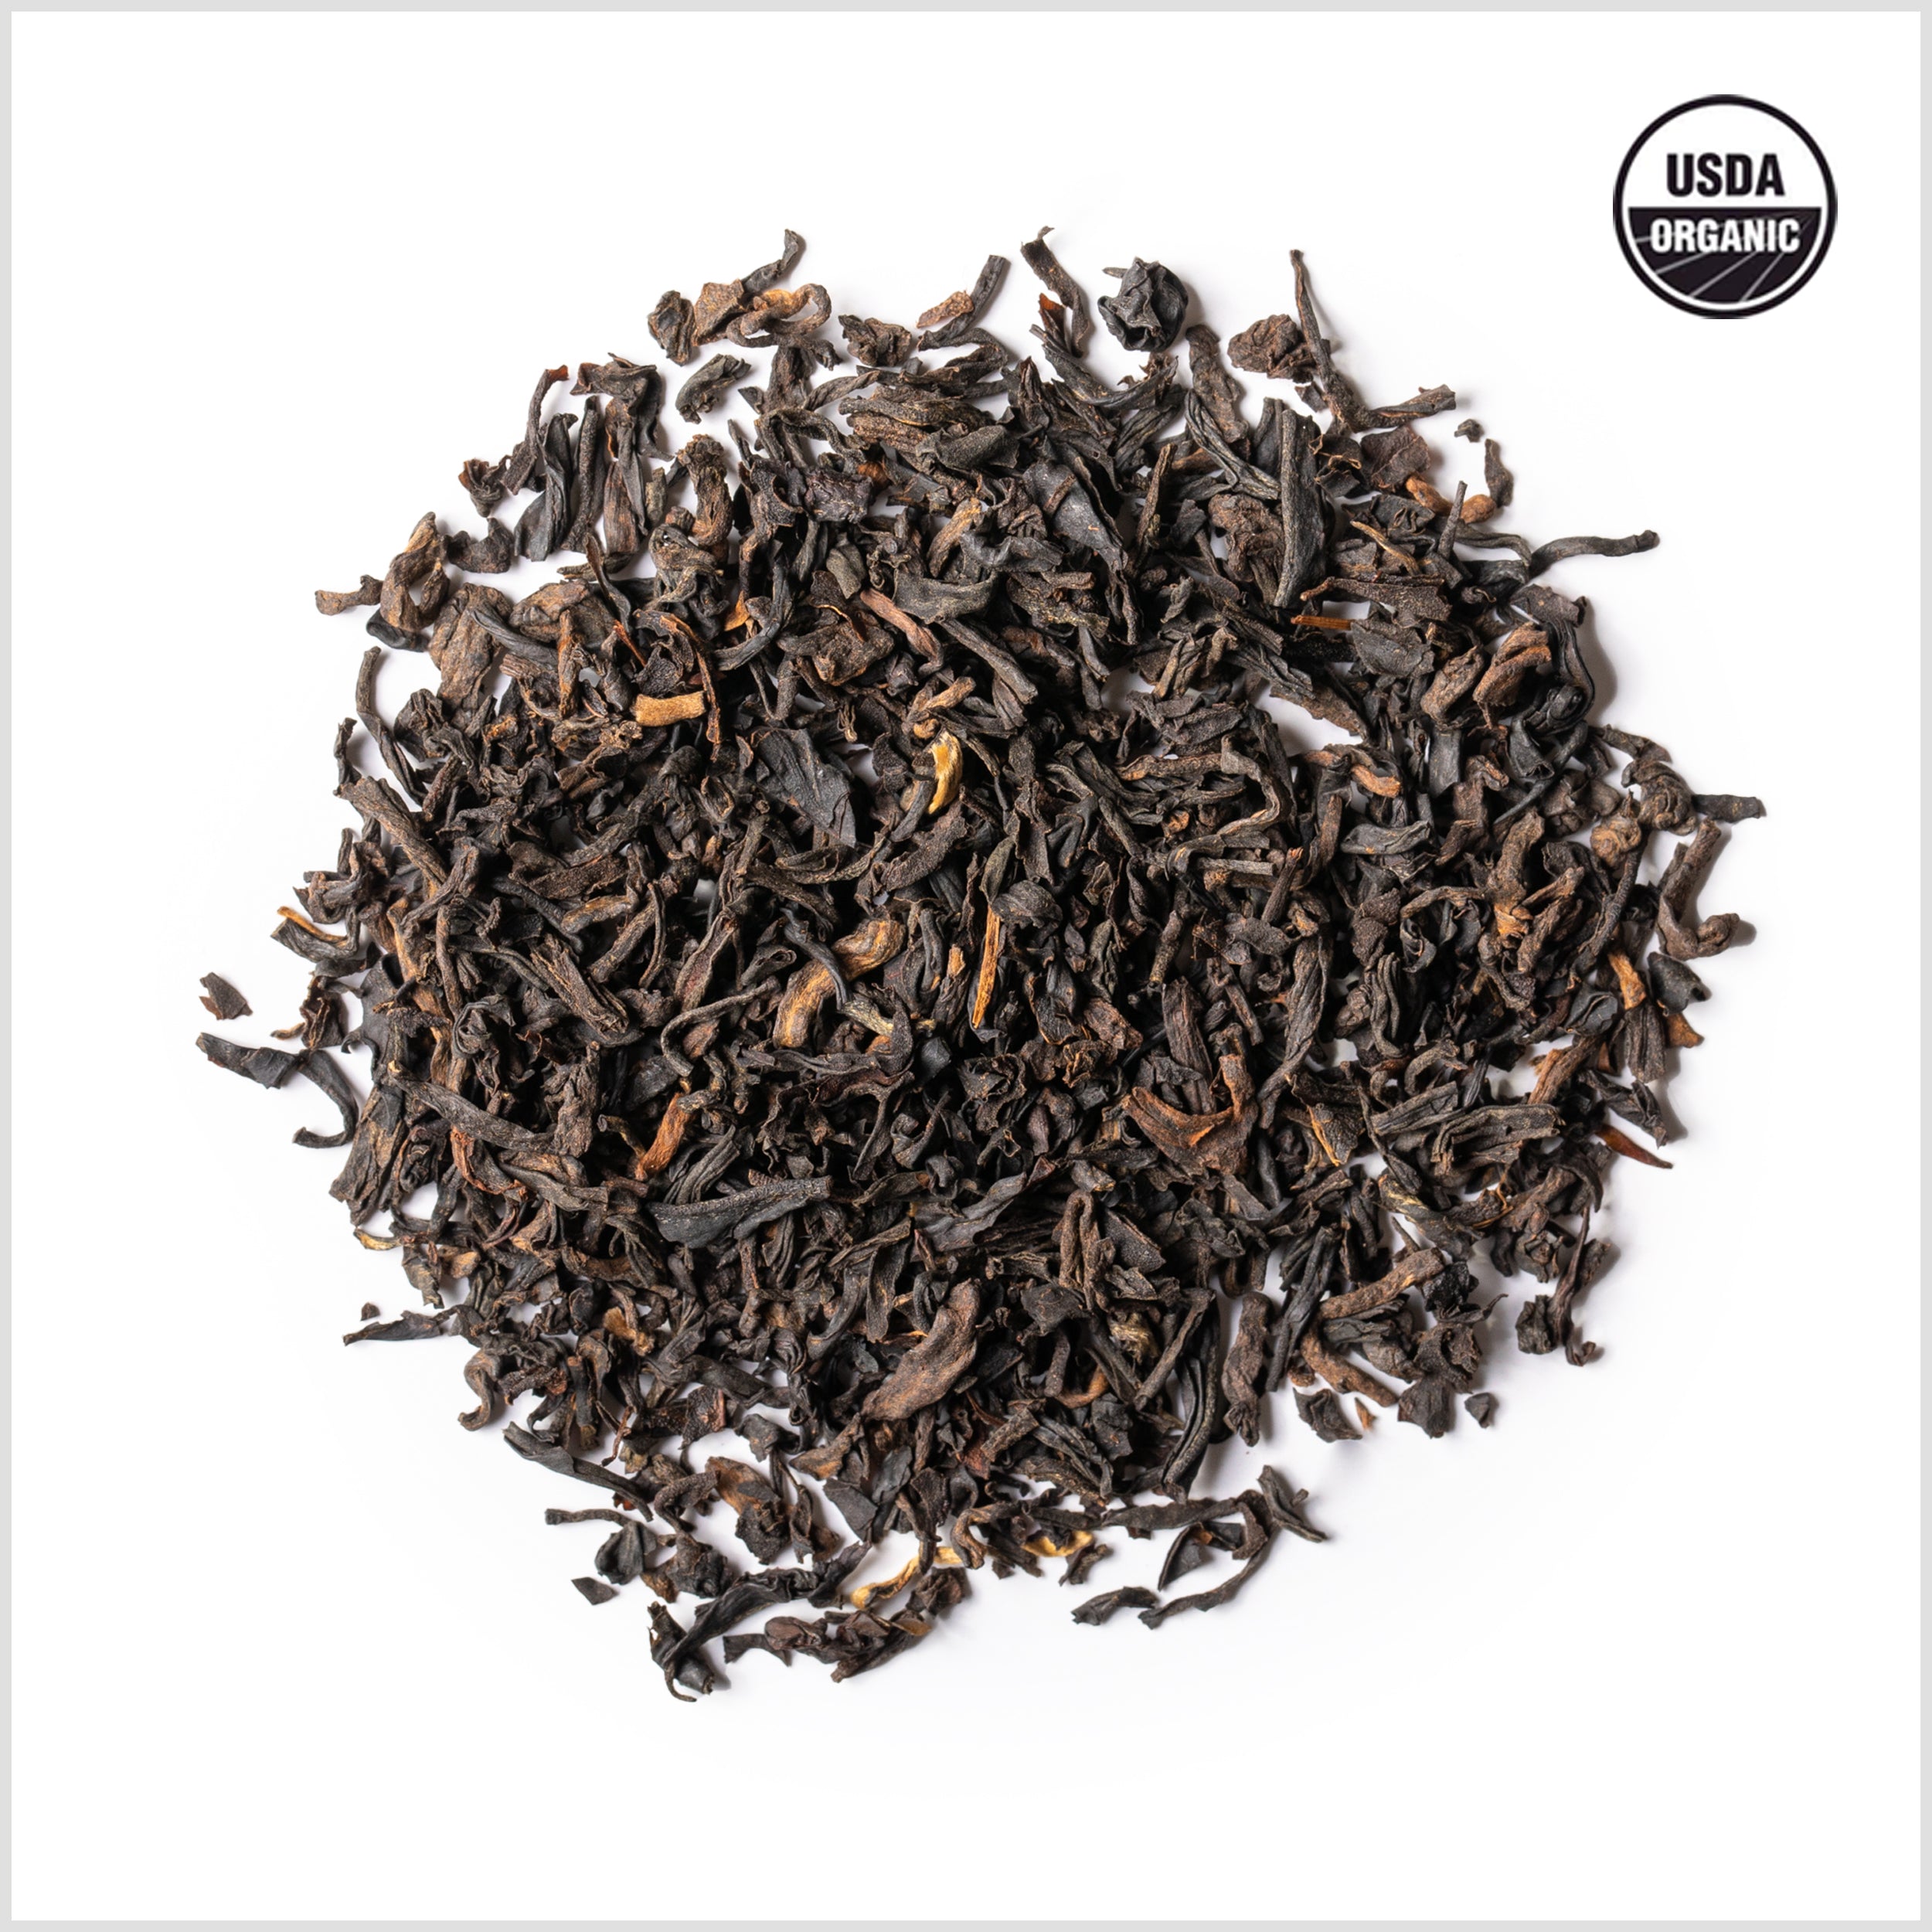 Circular pile of loose-leaf Portland Breakfast Black Tea with USDA Organic symbol.